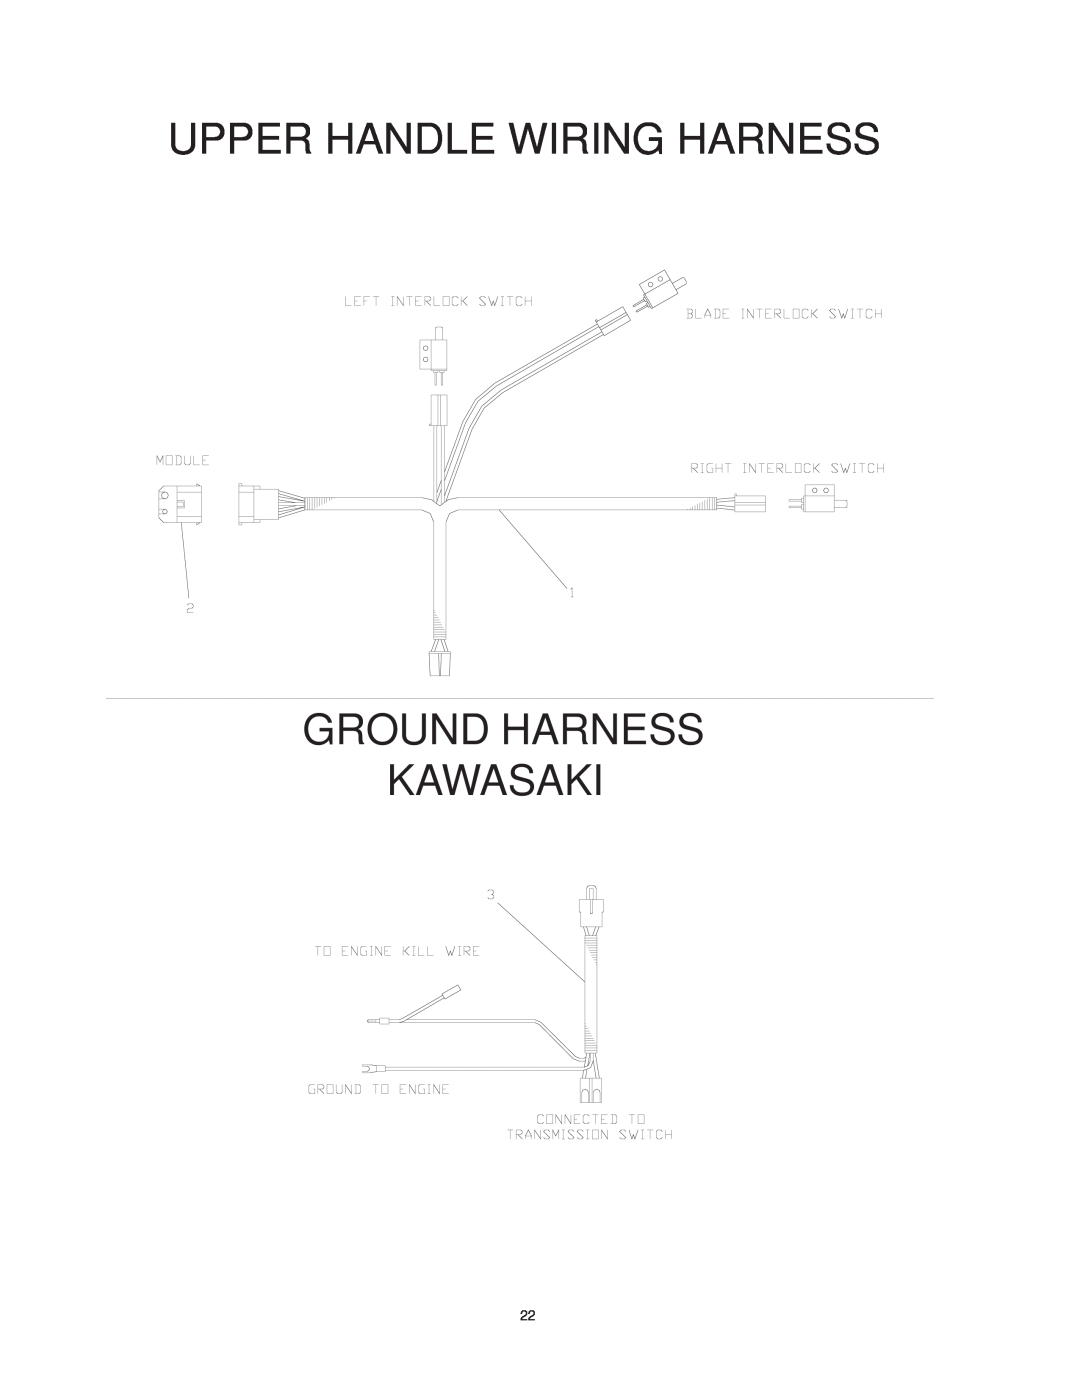 Yazoo/Kees KKH36152, KKW48152, KKW36132, KKW32132, KKH36132, KKH32132 Upper Handle Wiring Harness Ground Harness, Kawasaki 